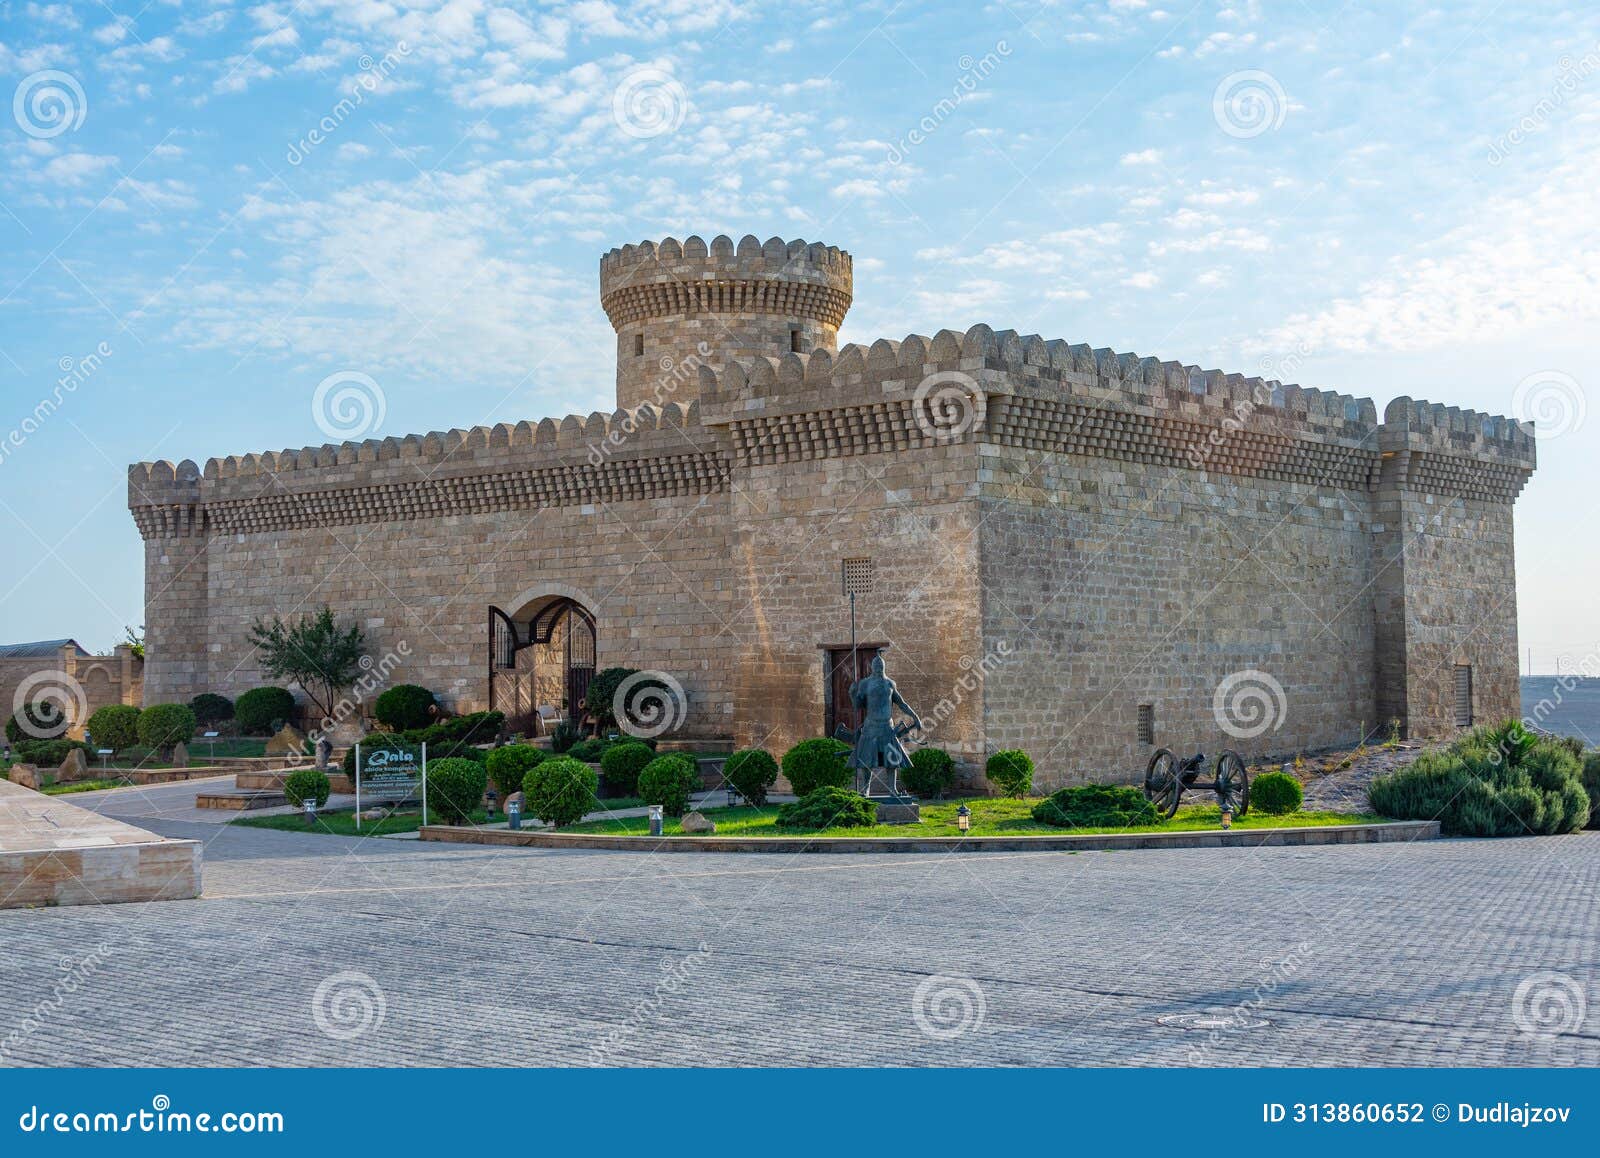 summer day at qala castle in azerbaijan